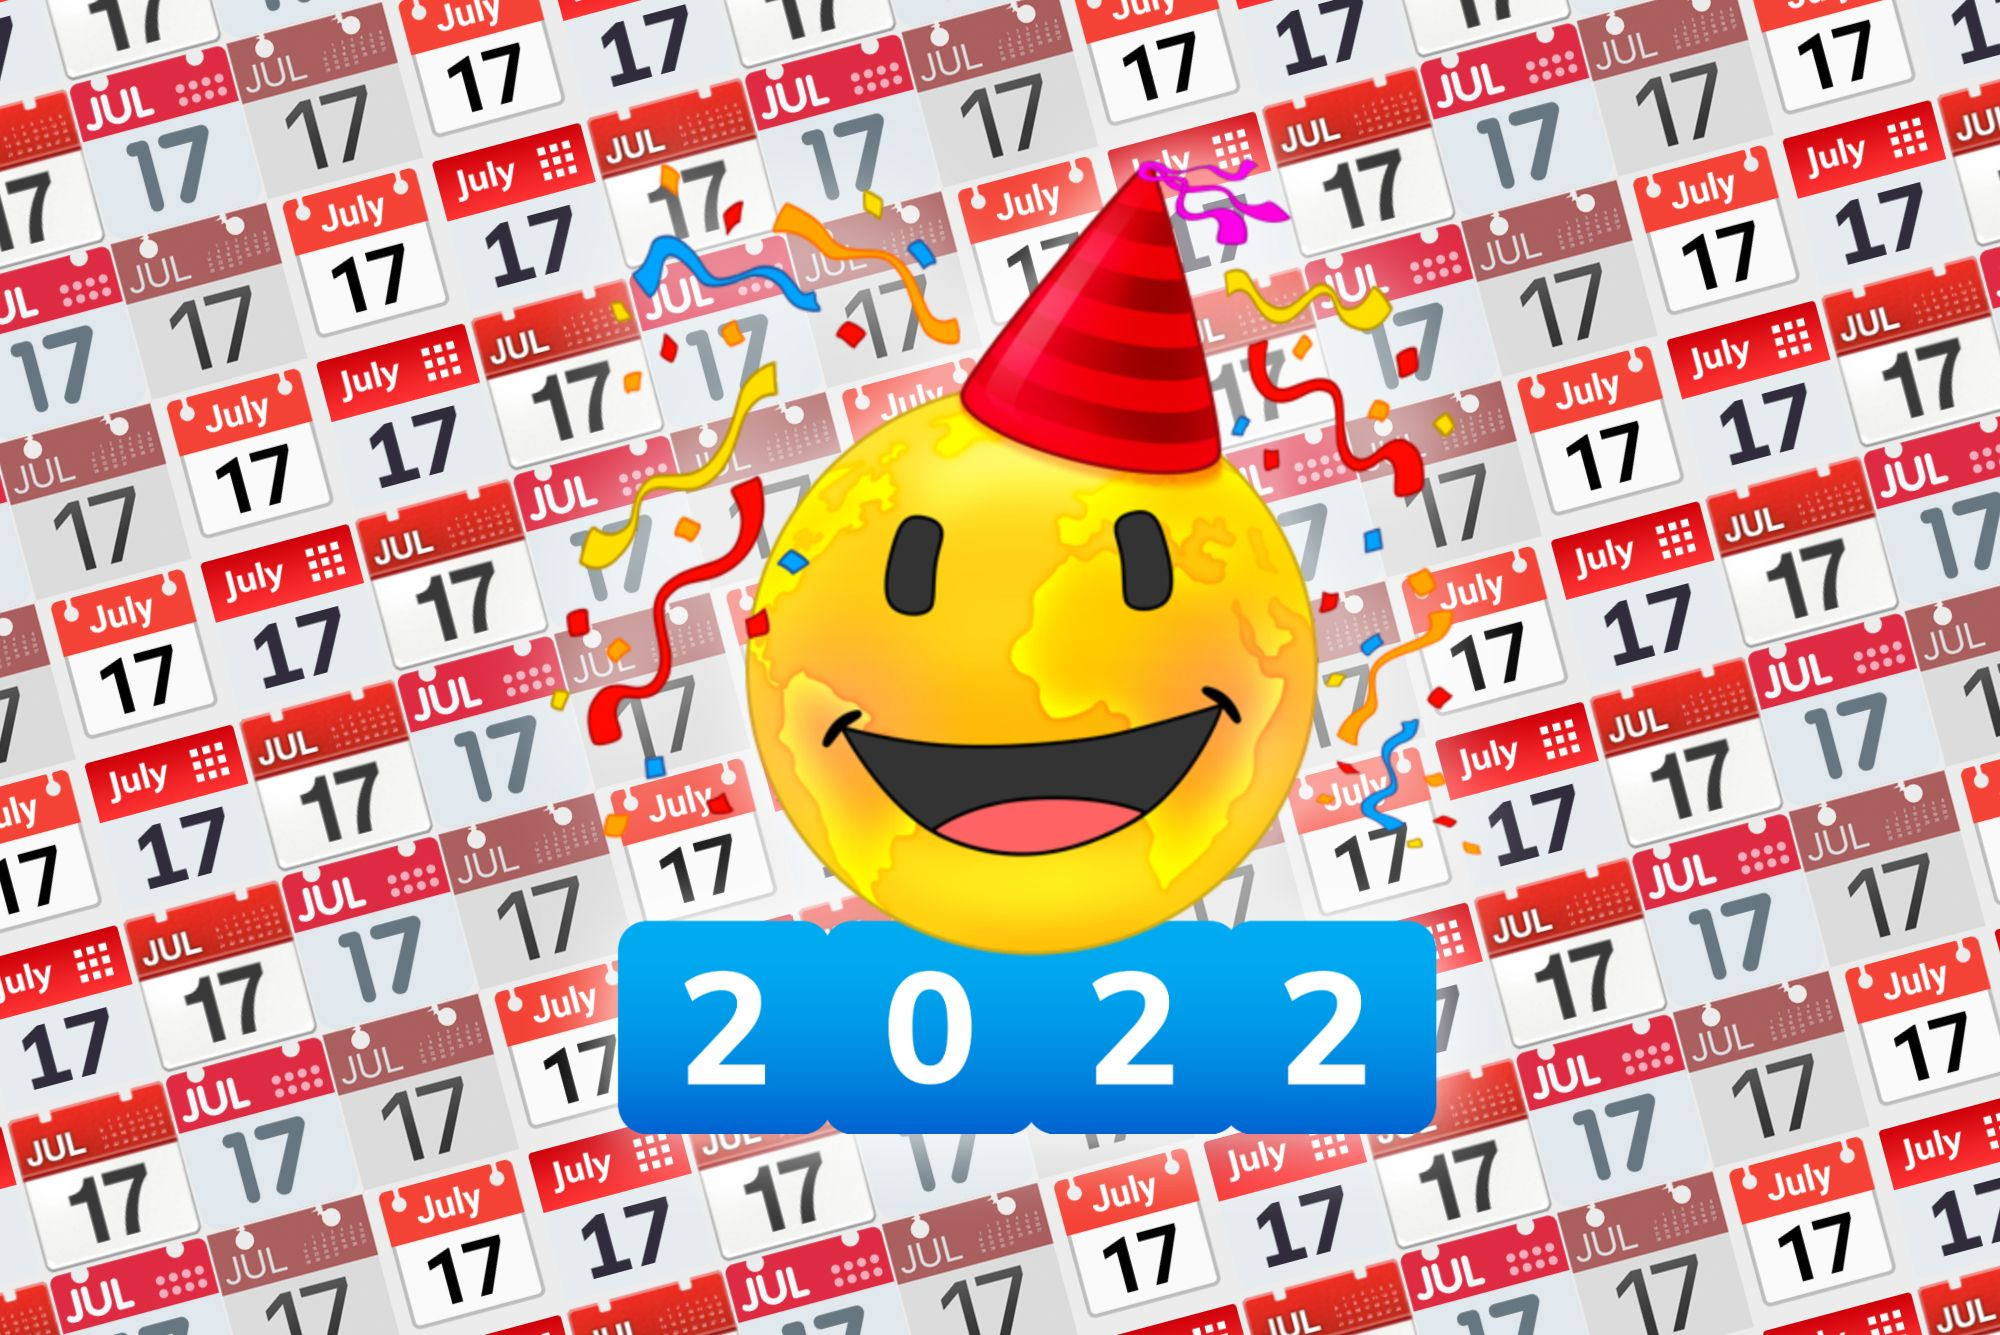 What’s New on World Emoji Day 2022